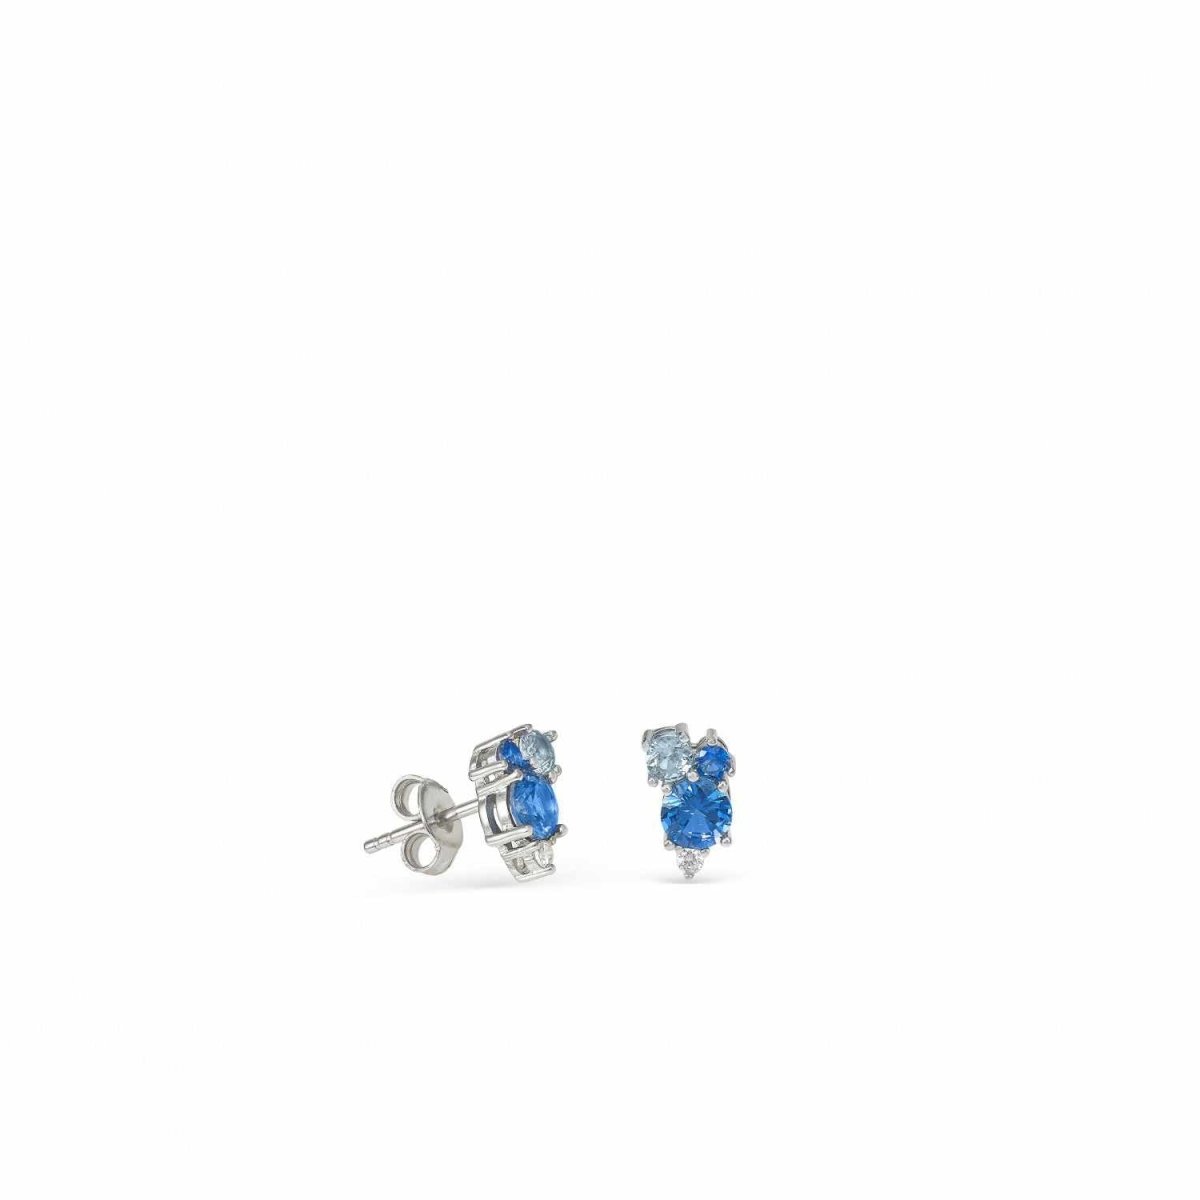 Earrings - Small silver earrings adamantine quartz blue